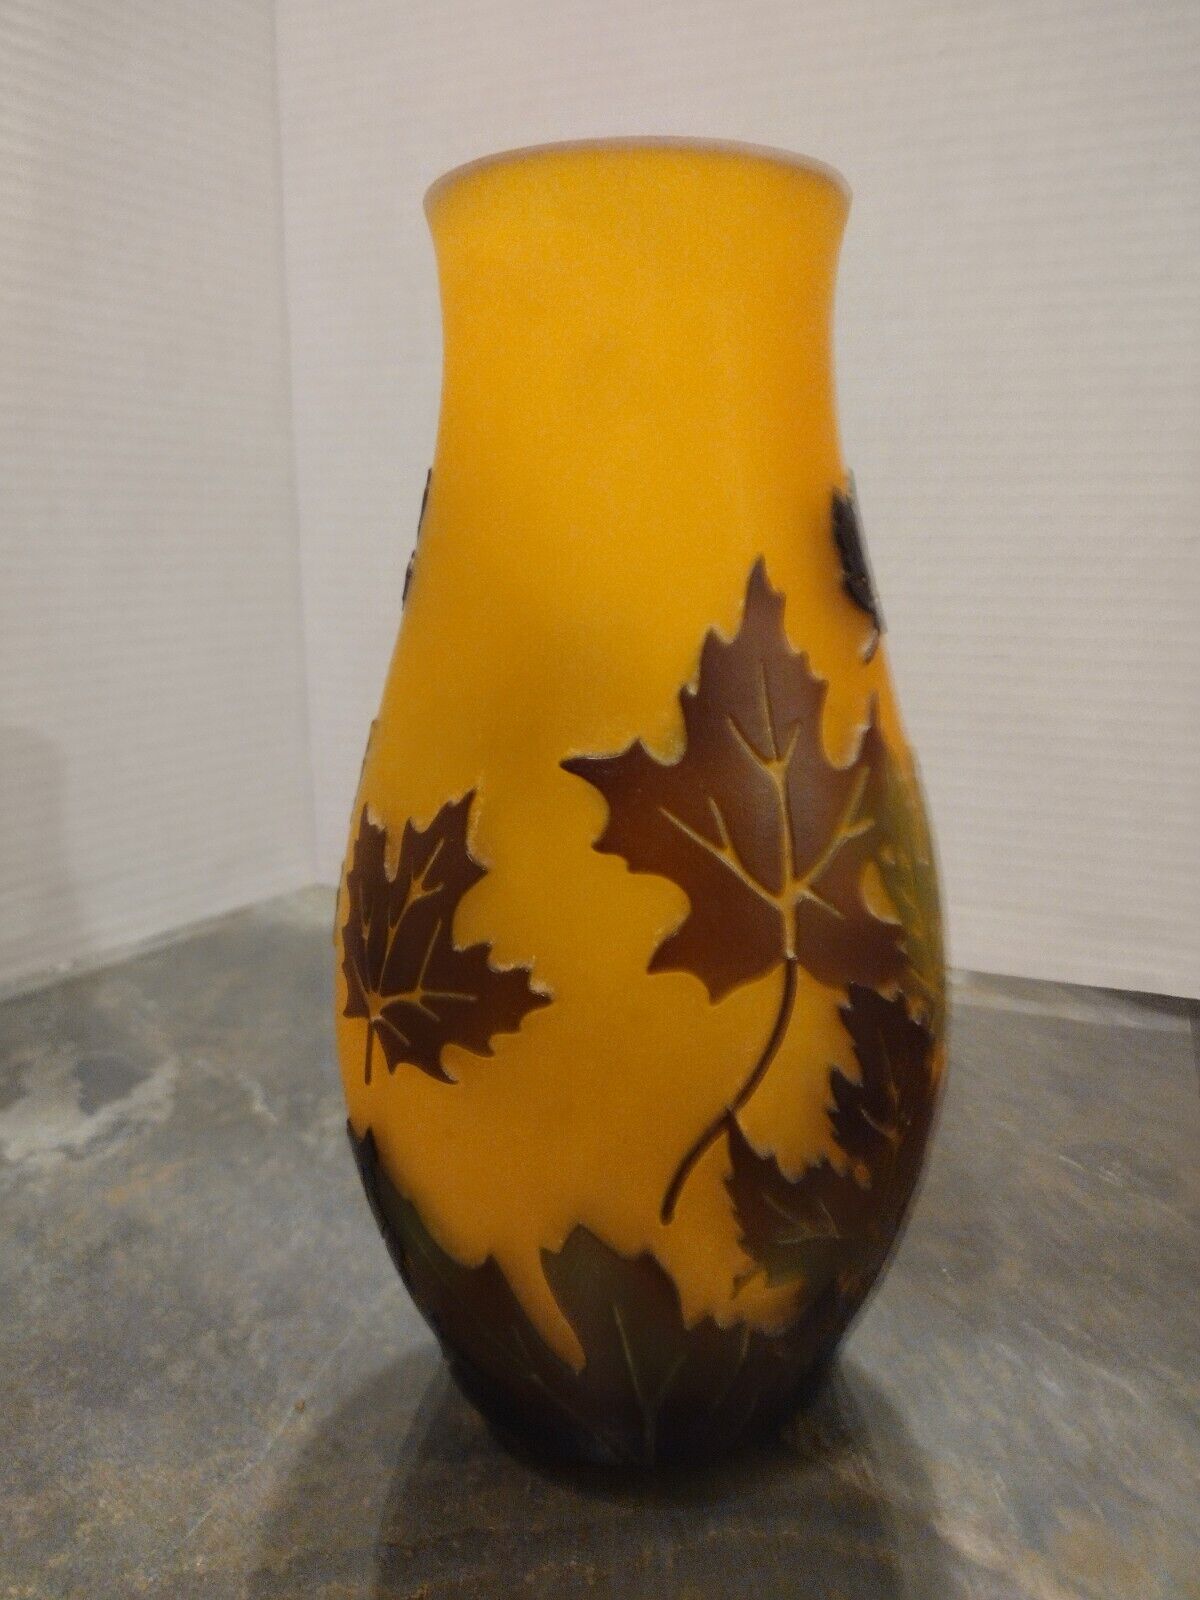 Emile Galle Style Cameo Art Glass Vase Orange with Maple Leaf Design -Layered 3D